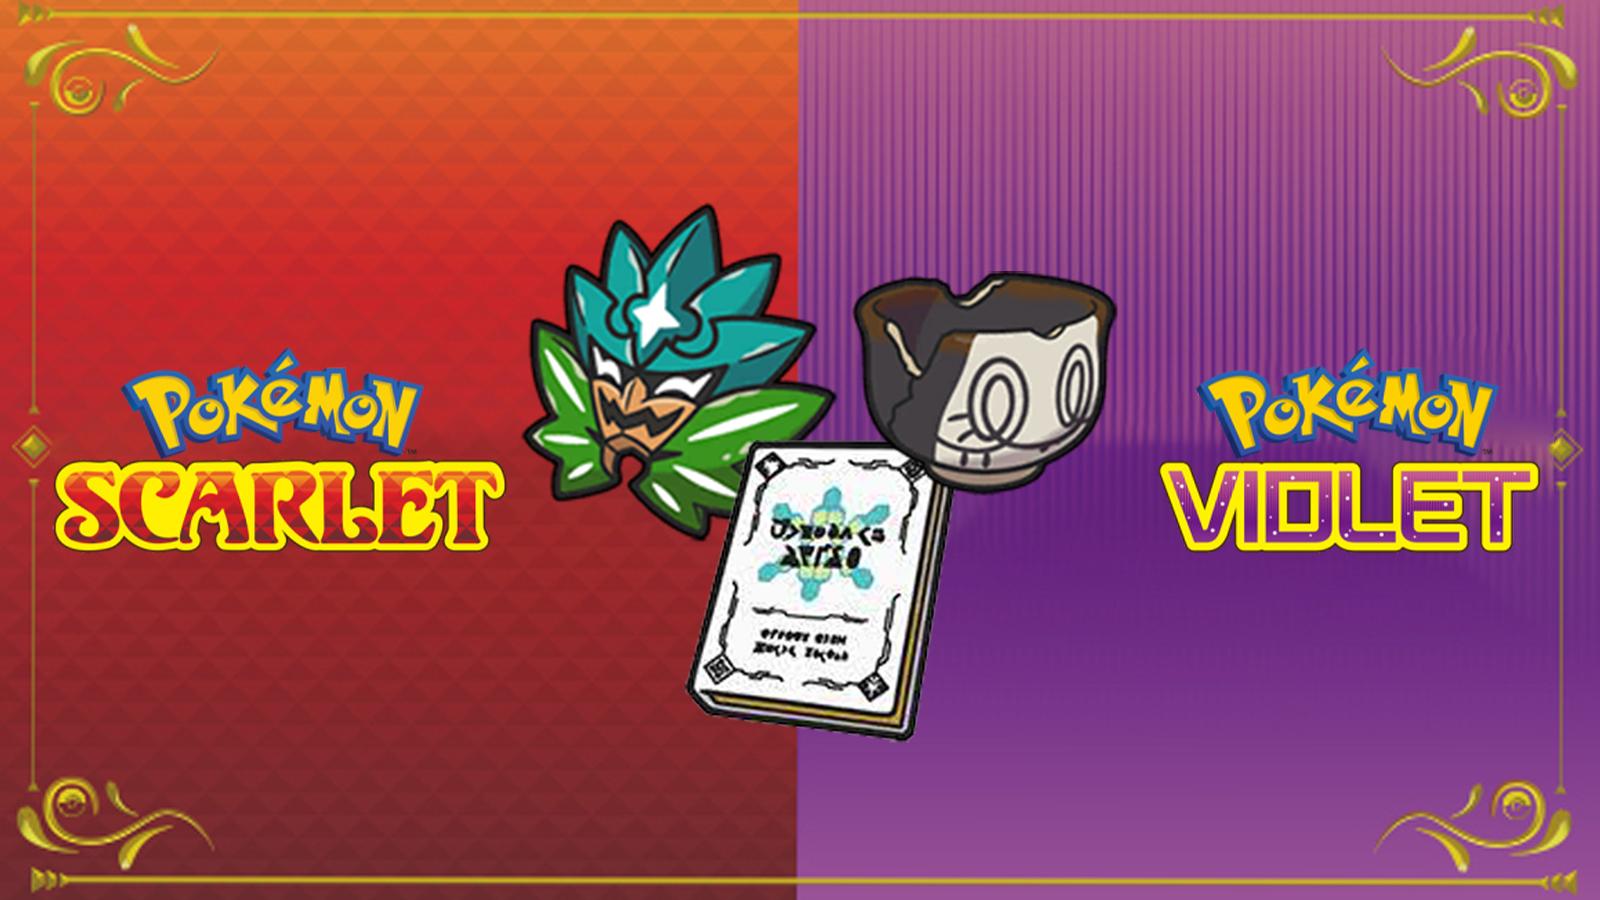 Confira as Novidades da DLC de Pokémon Scarlet e Violet - The